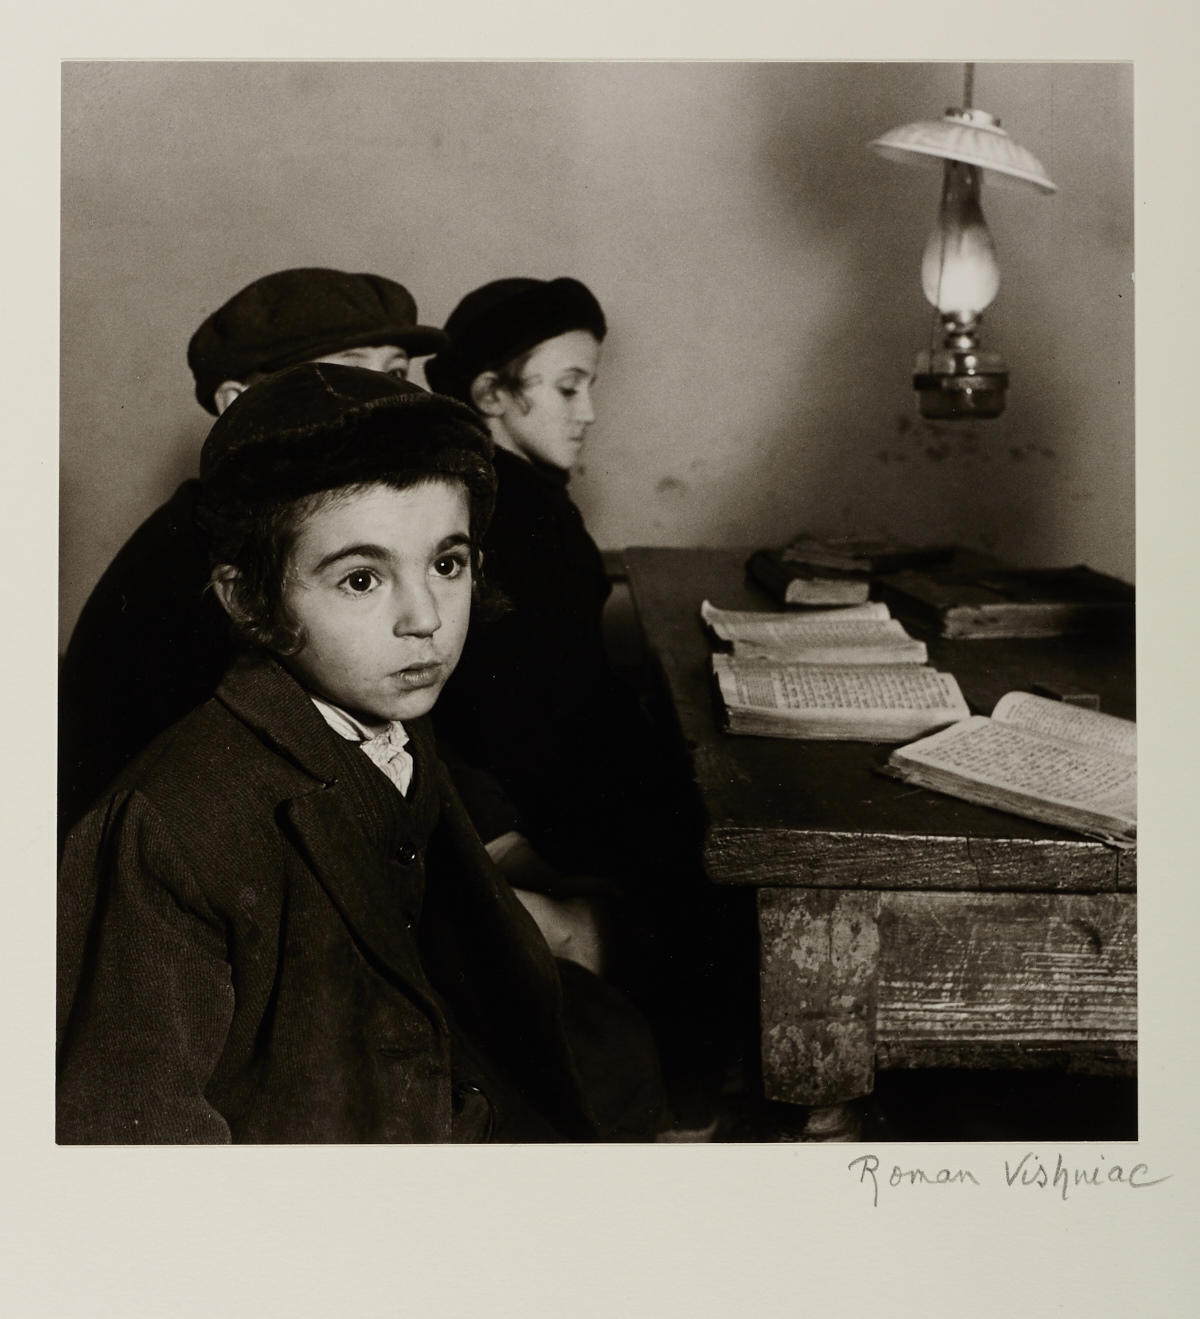 ROMAN VISHNIAC (1897–1990) Schüler / School boys (from ‘The Vanished World Portfolio’), 1940s